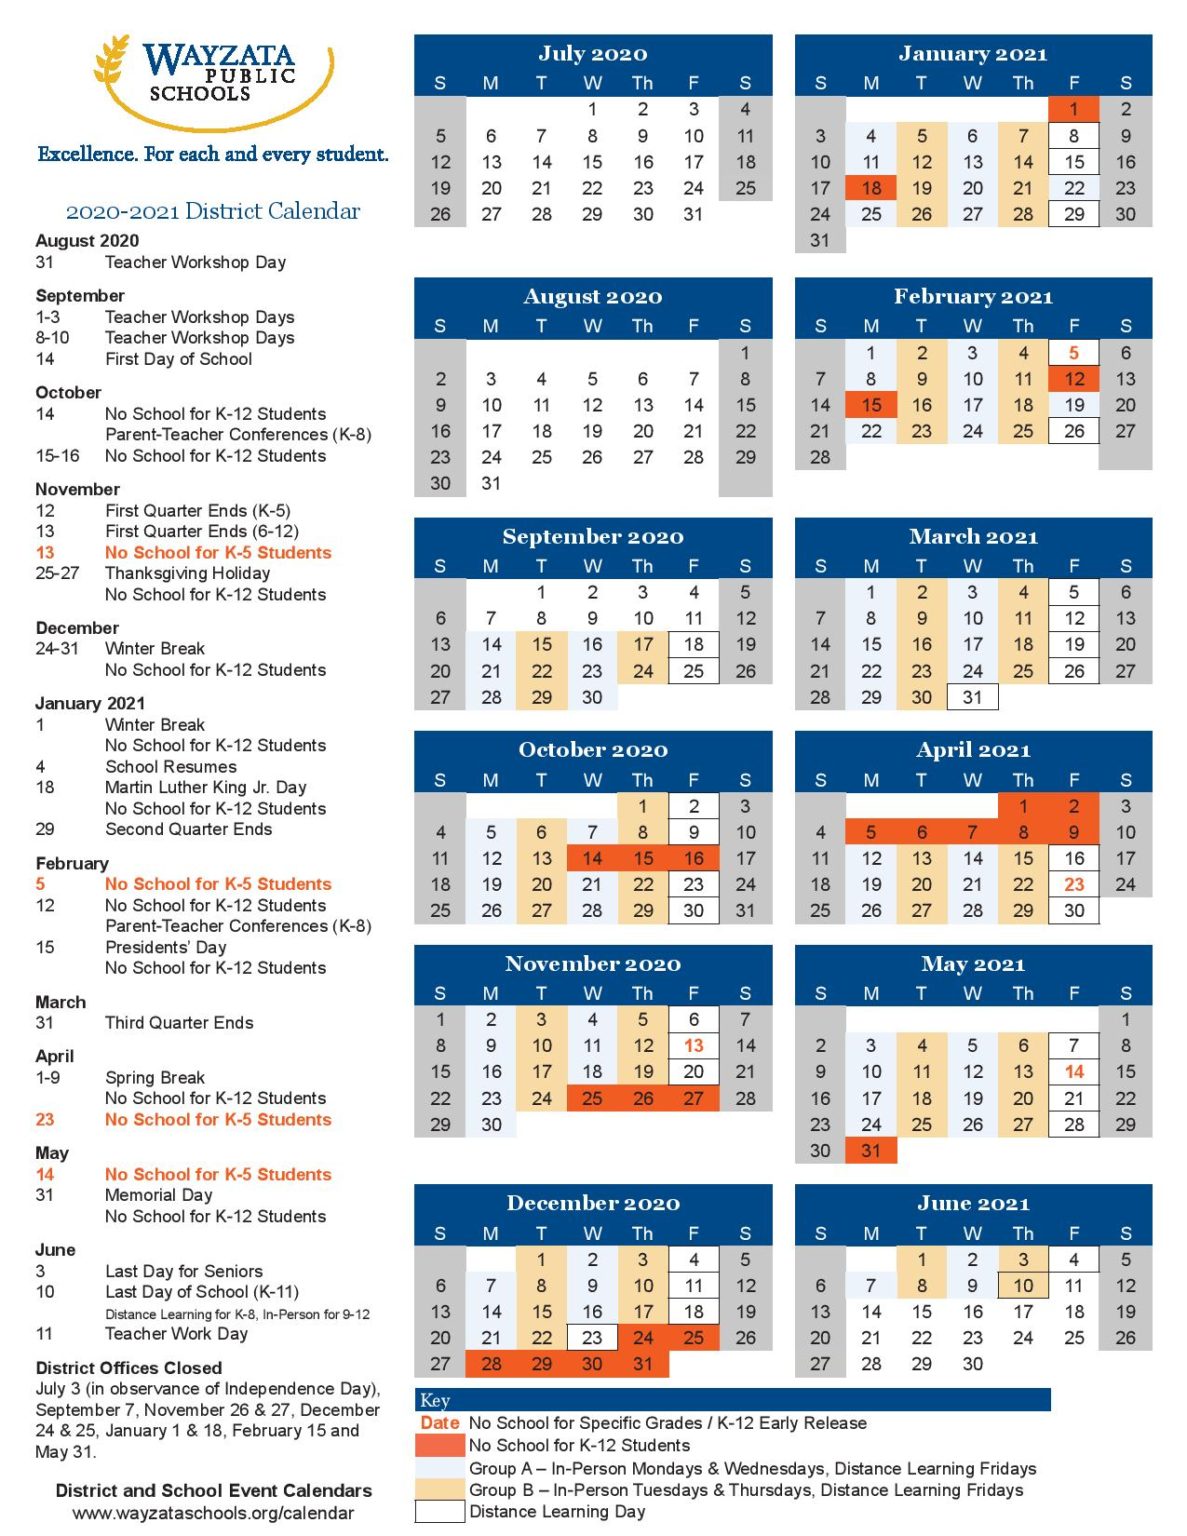 wayzata-public-schools-calendar-2020-2021-in-pdf